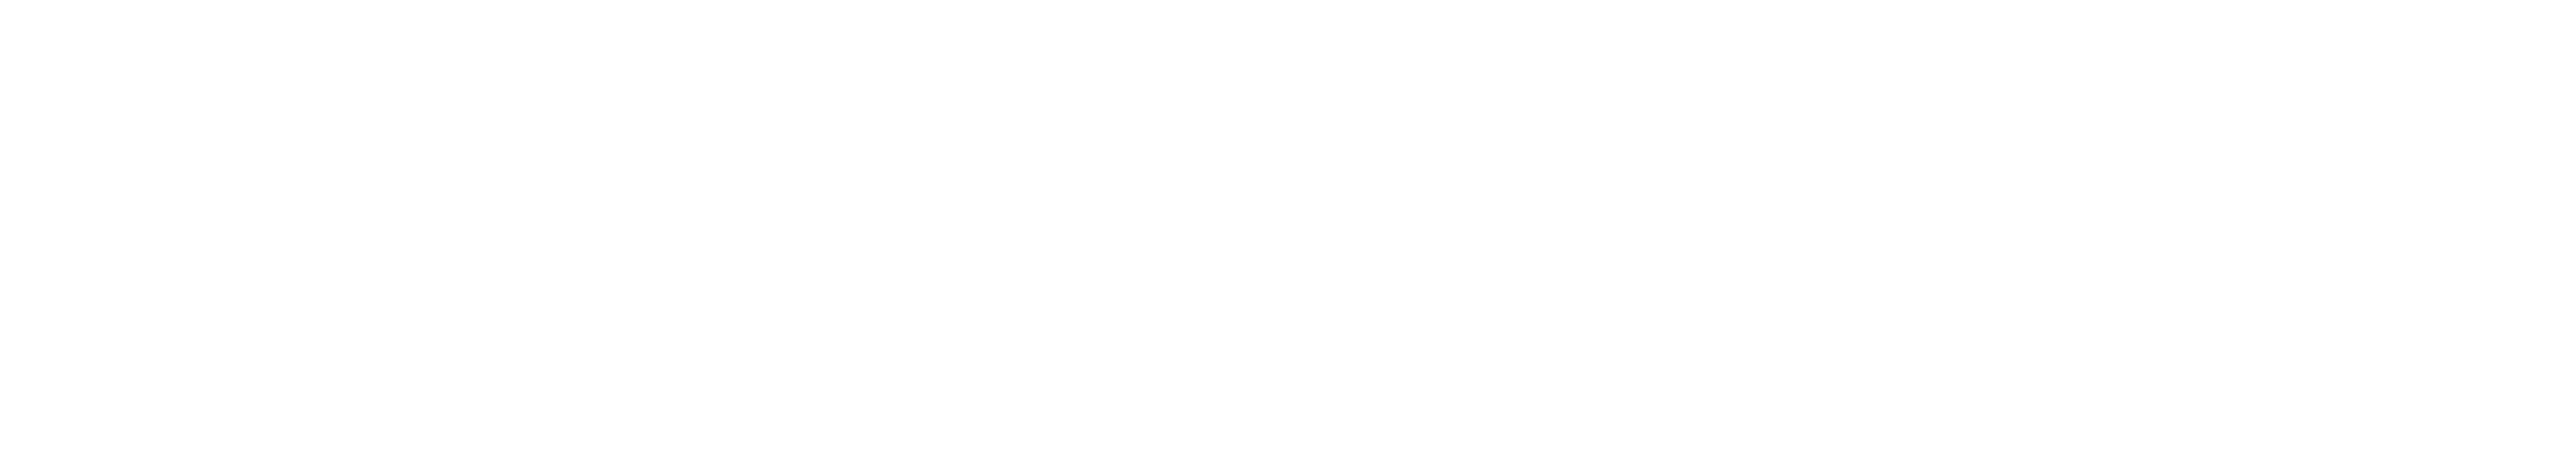 University Center Group